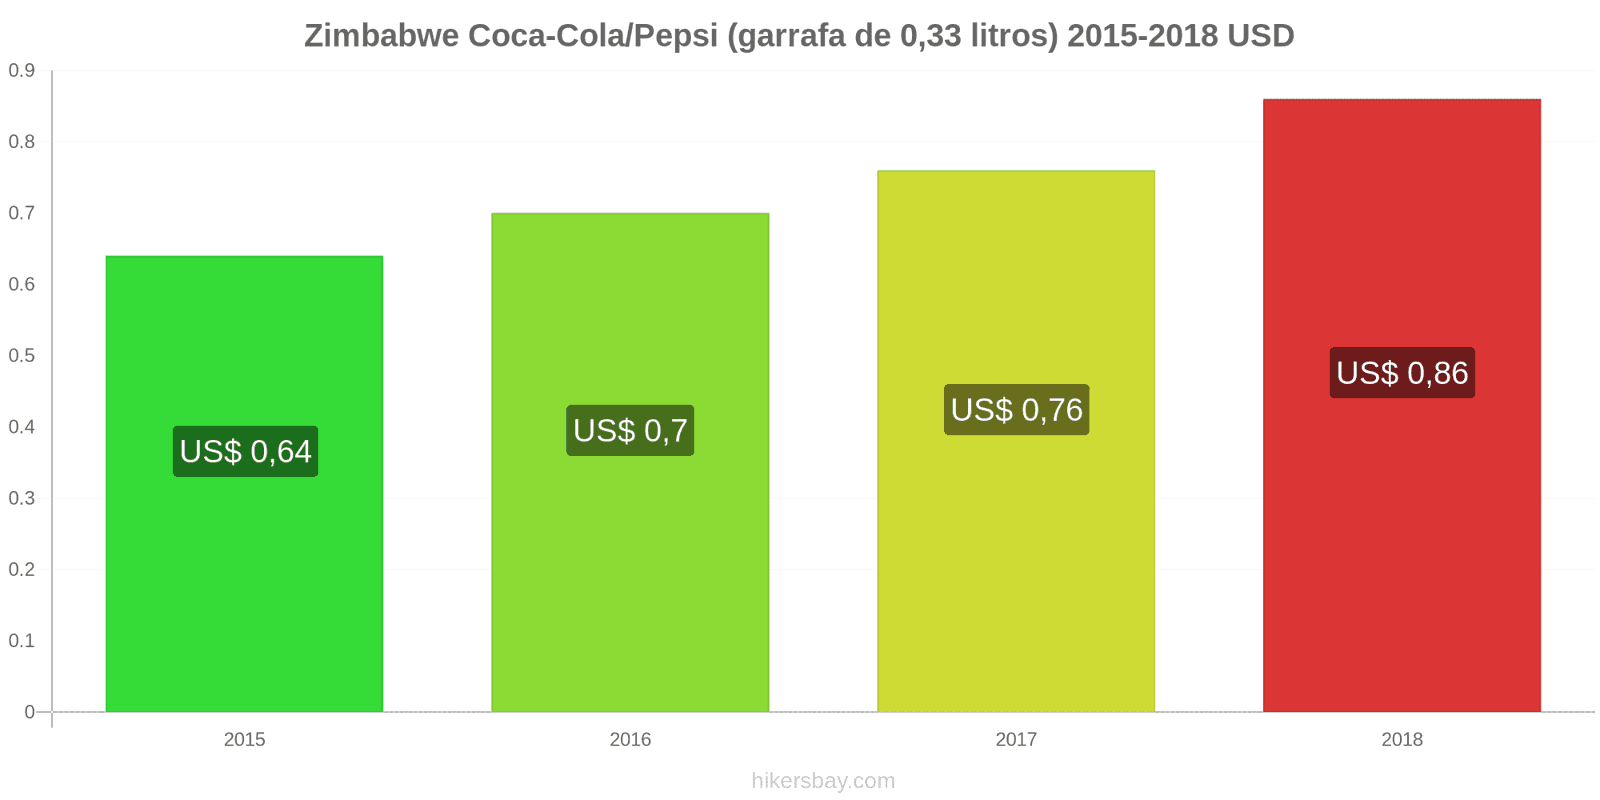 Zimbabwe mudanças de preços Coca-Cola/Pepsi (garrafa de 0.33 litros) hikersbay.com